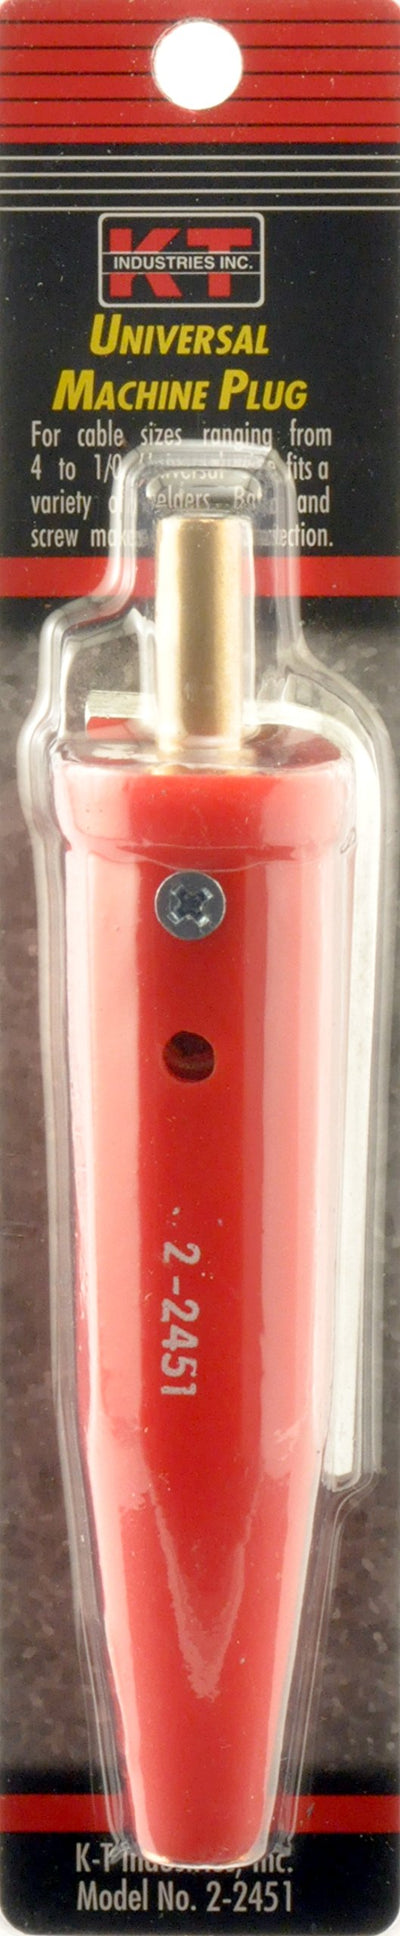 K-T Industries 2-2451 Universal Male Machine Plug, Red